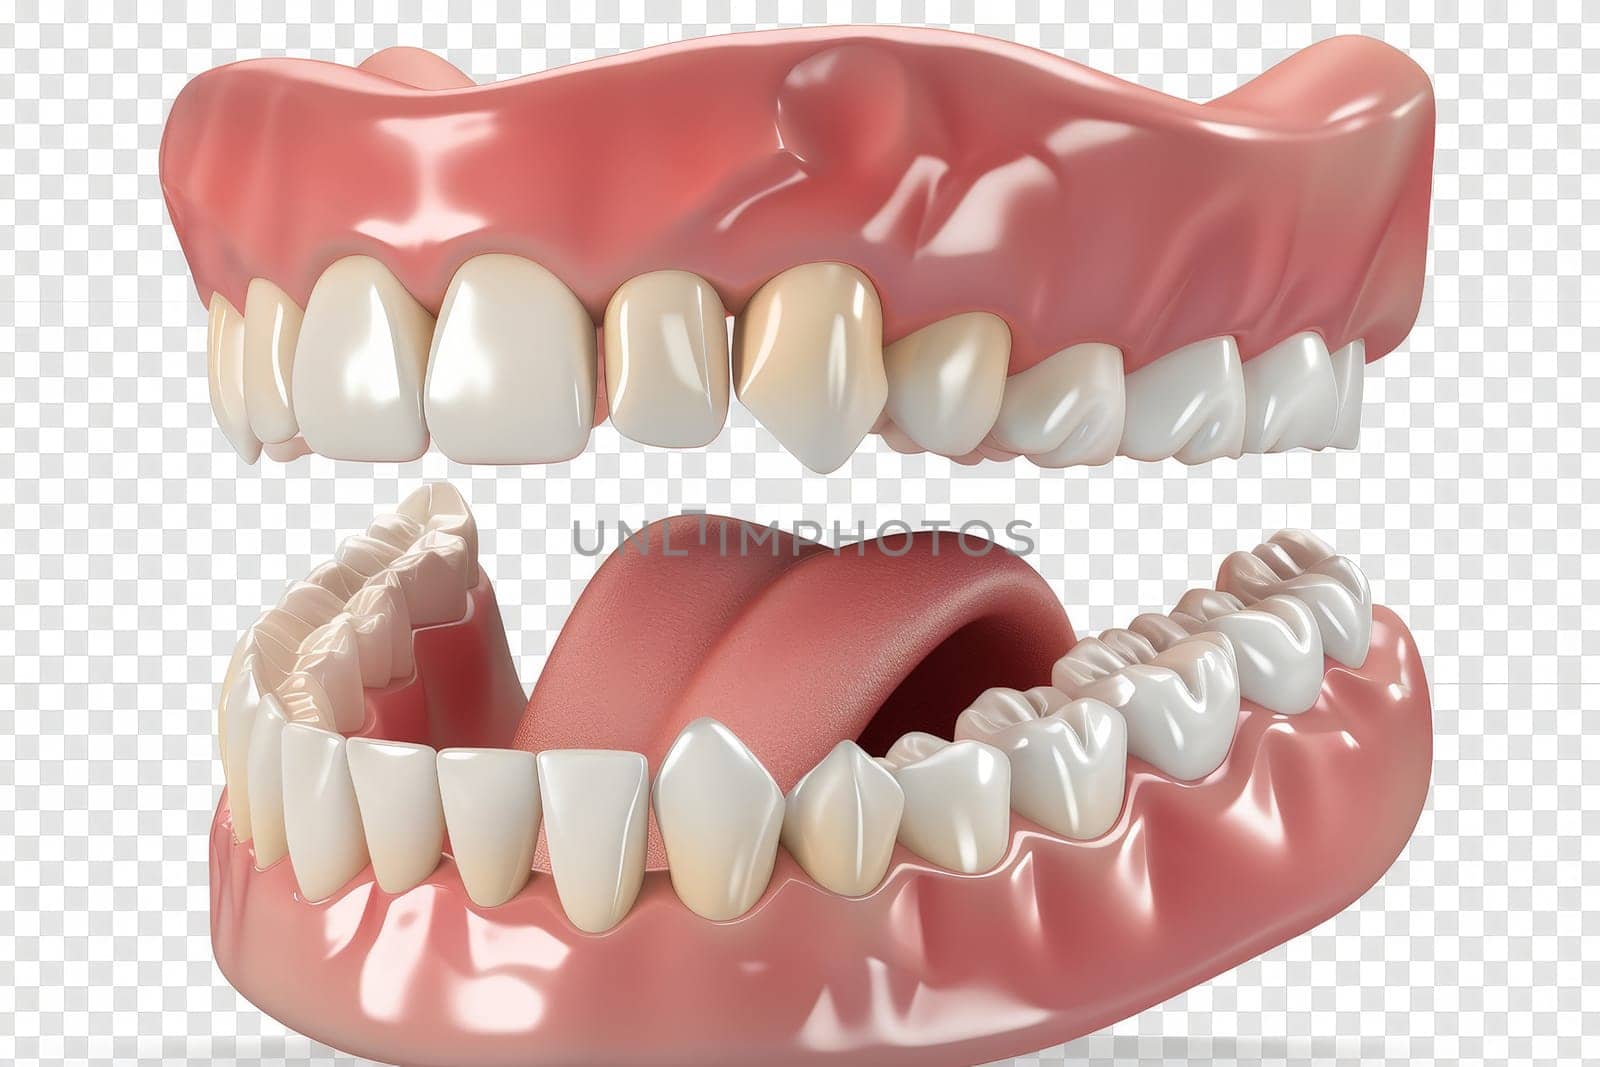 a mockup of a dental model human jaw or oral cavity. by matamnad